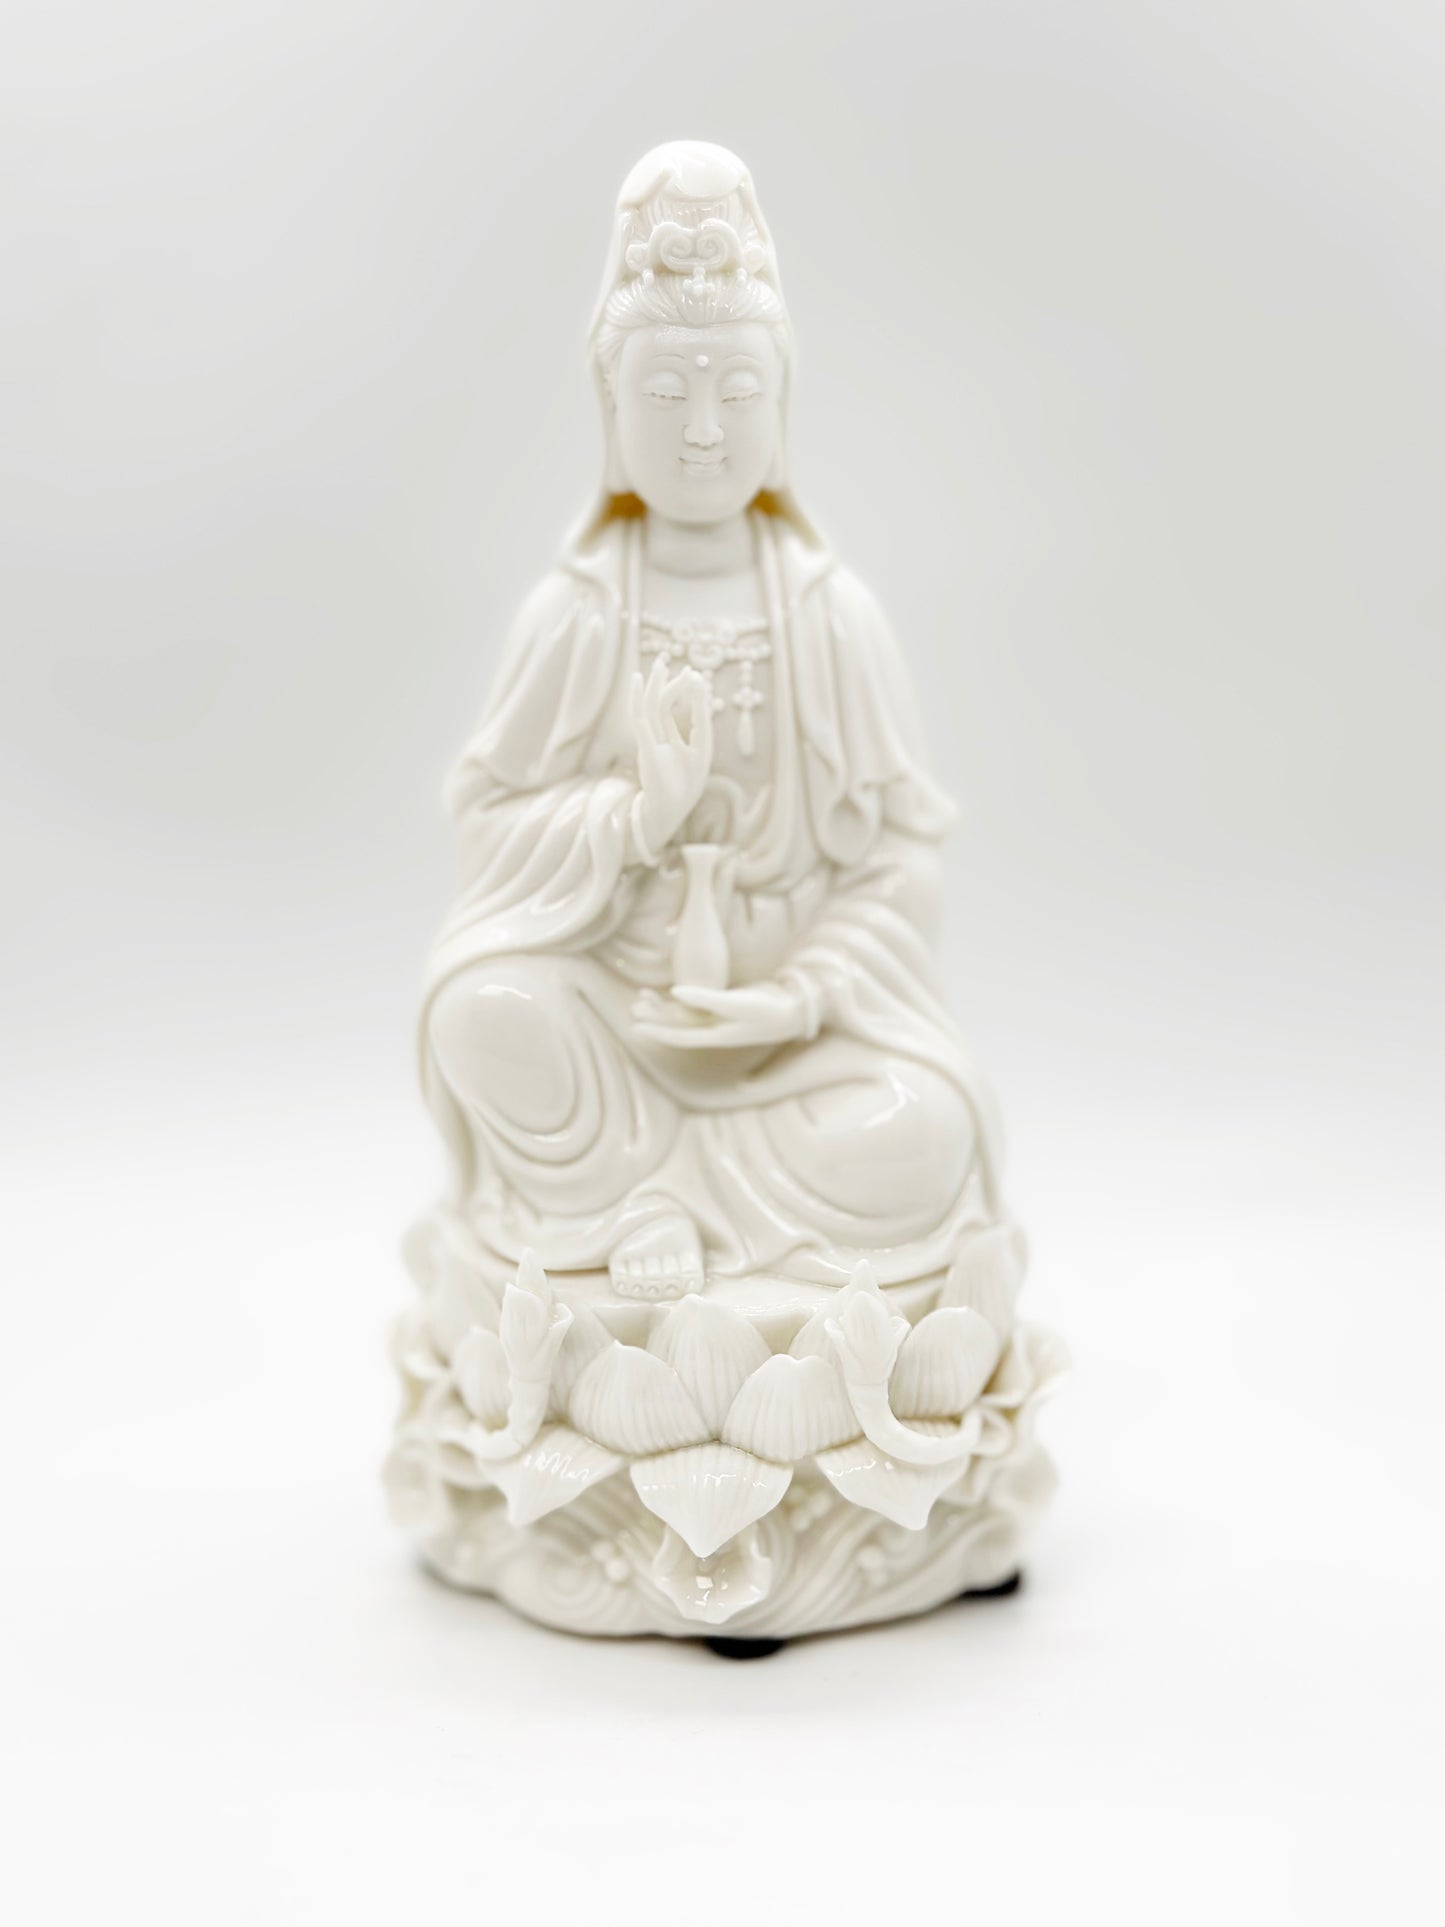 16622 - Kuan Yin Sitting on Lotus - 7 1/4 Inches Height